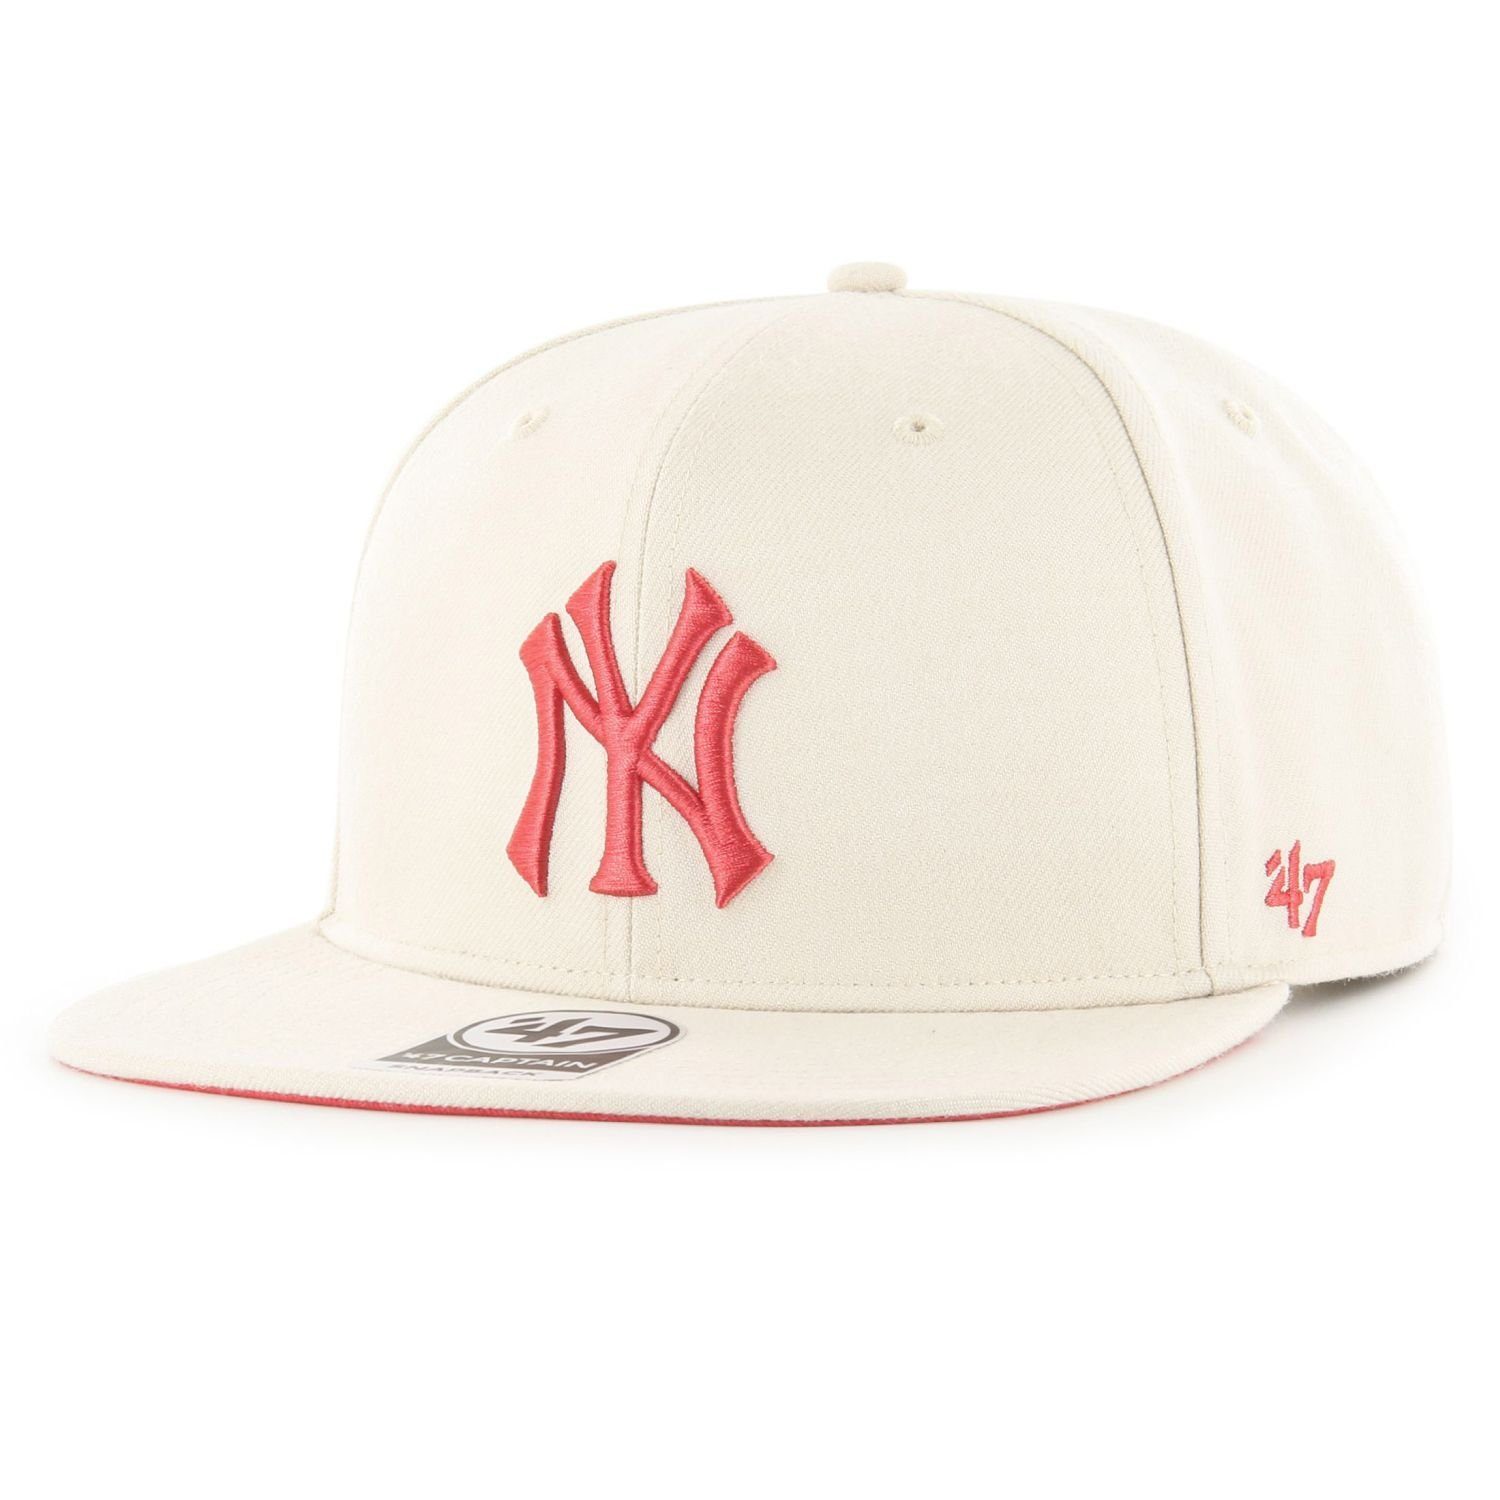 '47 Snapback CAPTAIN New Yankees Cap Brand York